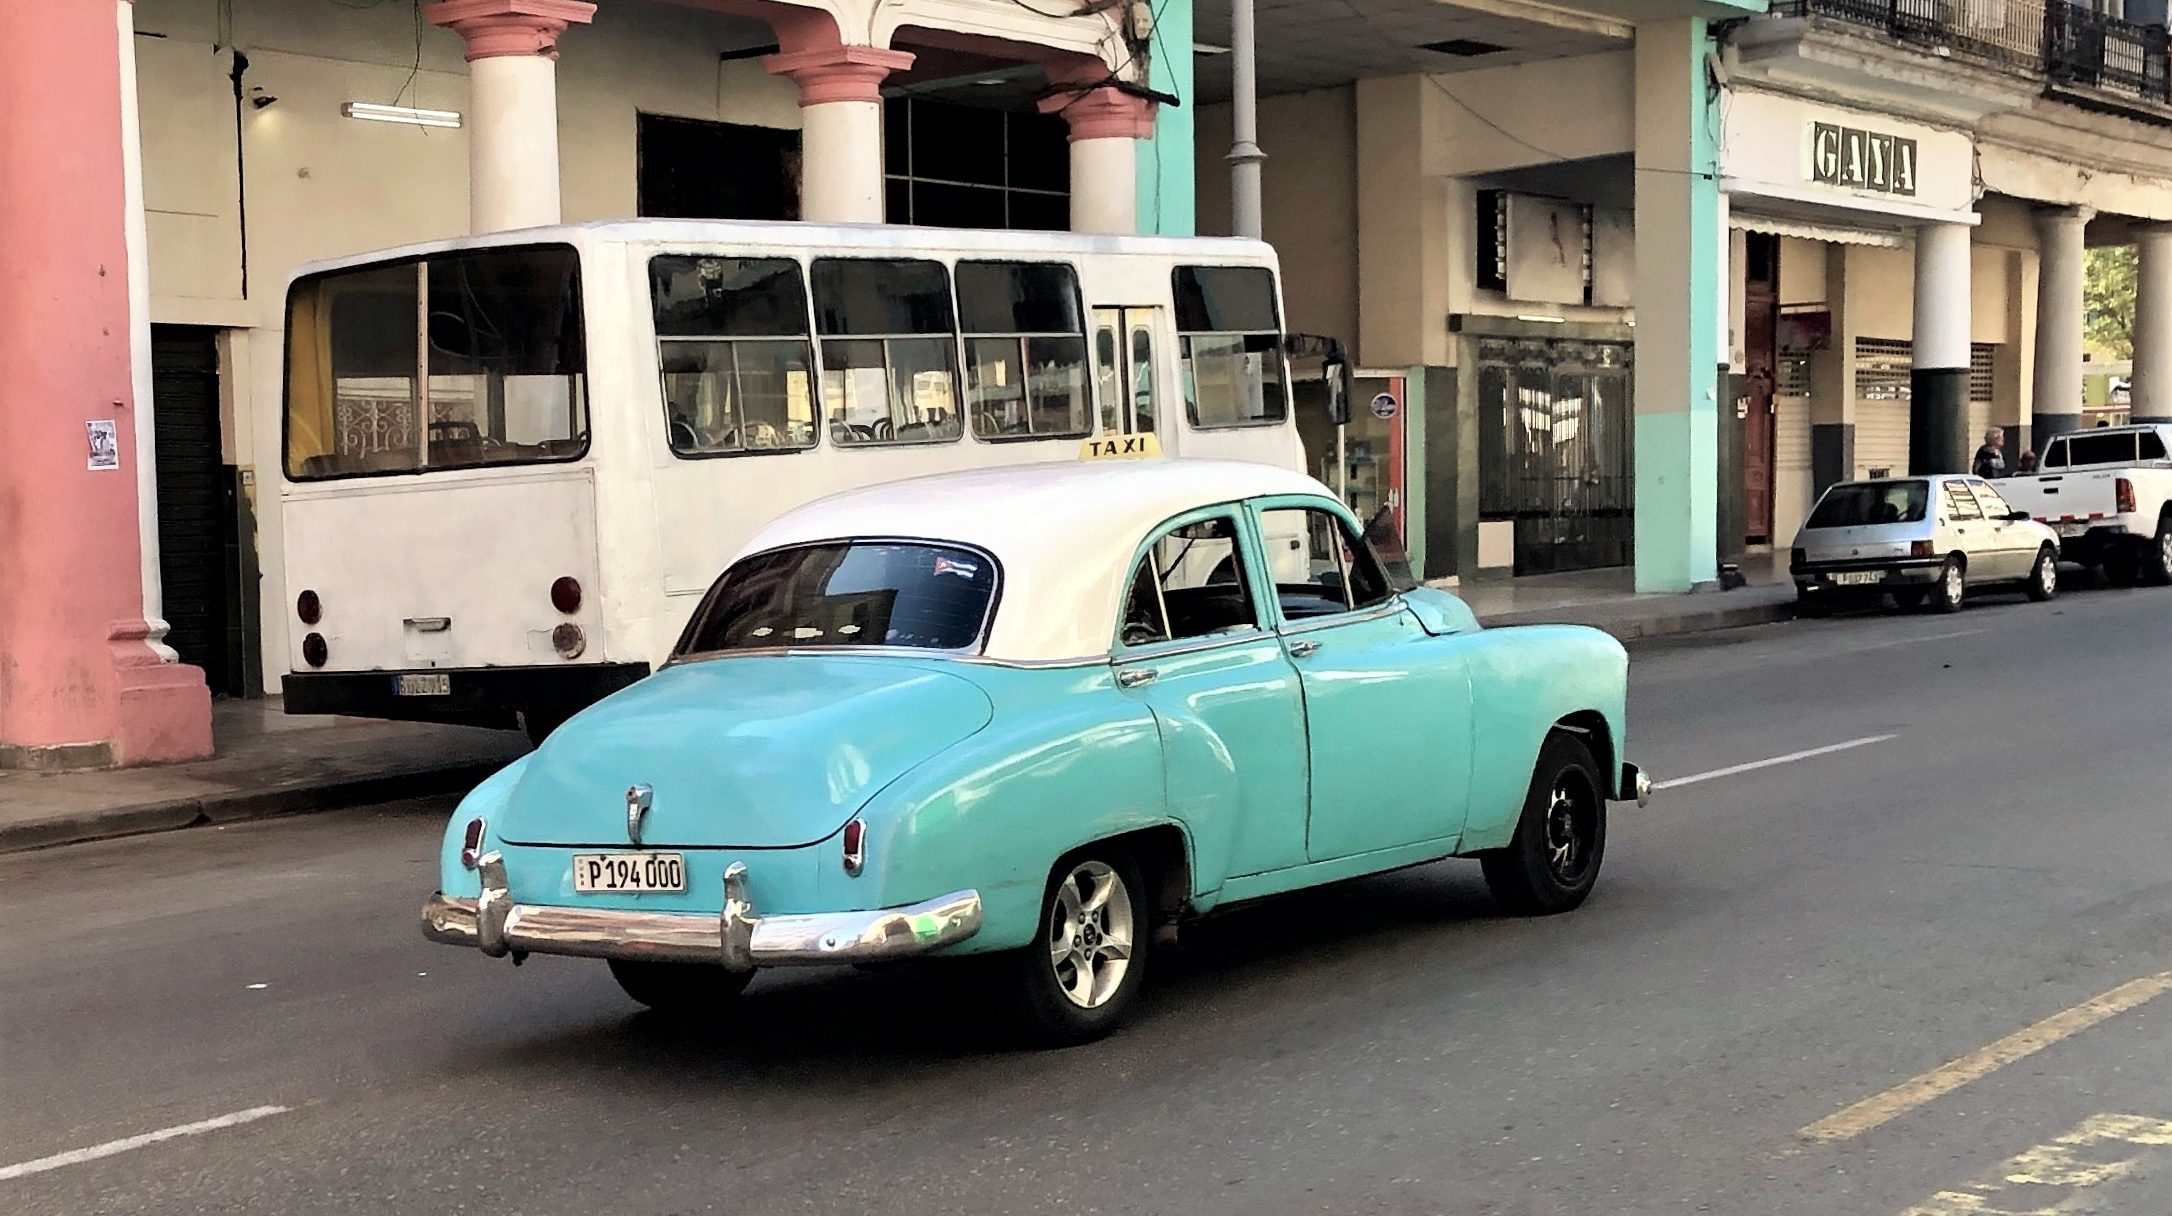 Thoughts on Havana, Cuba